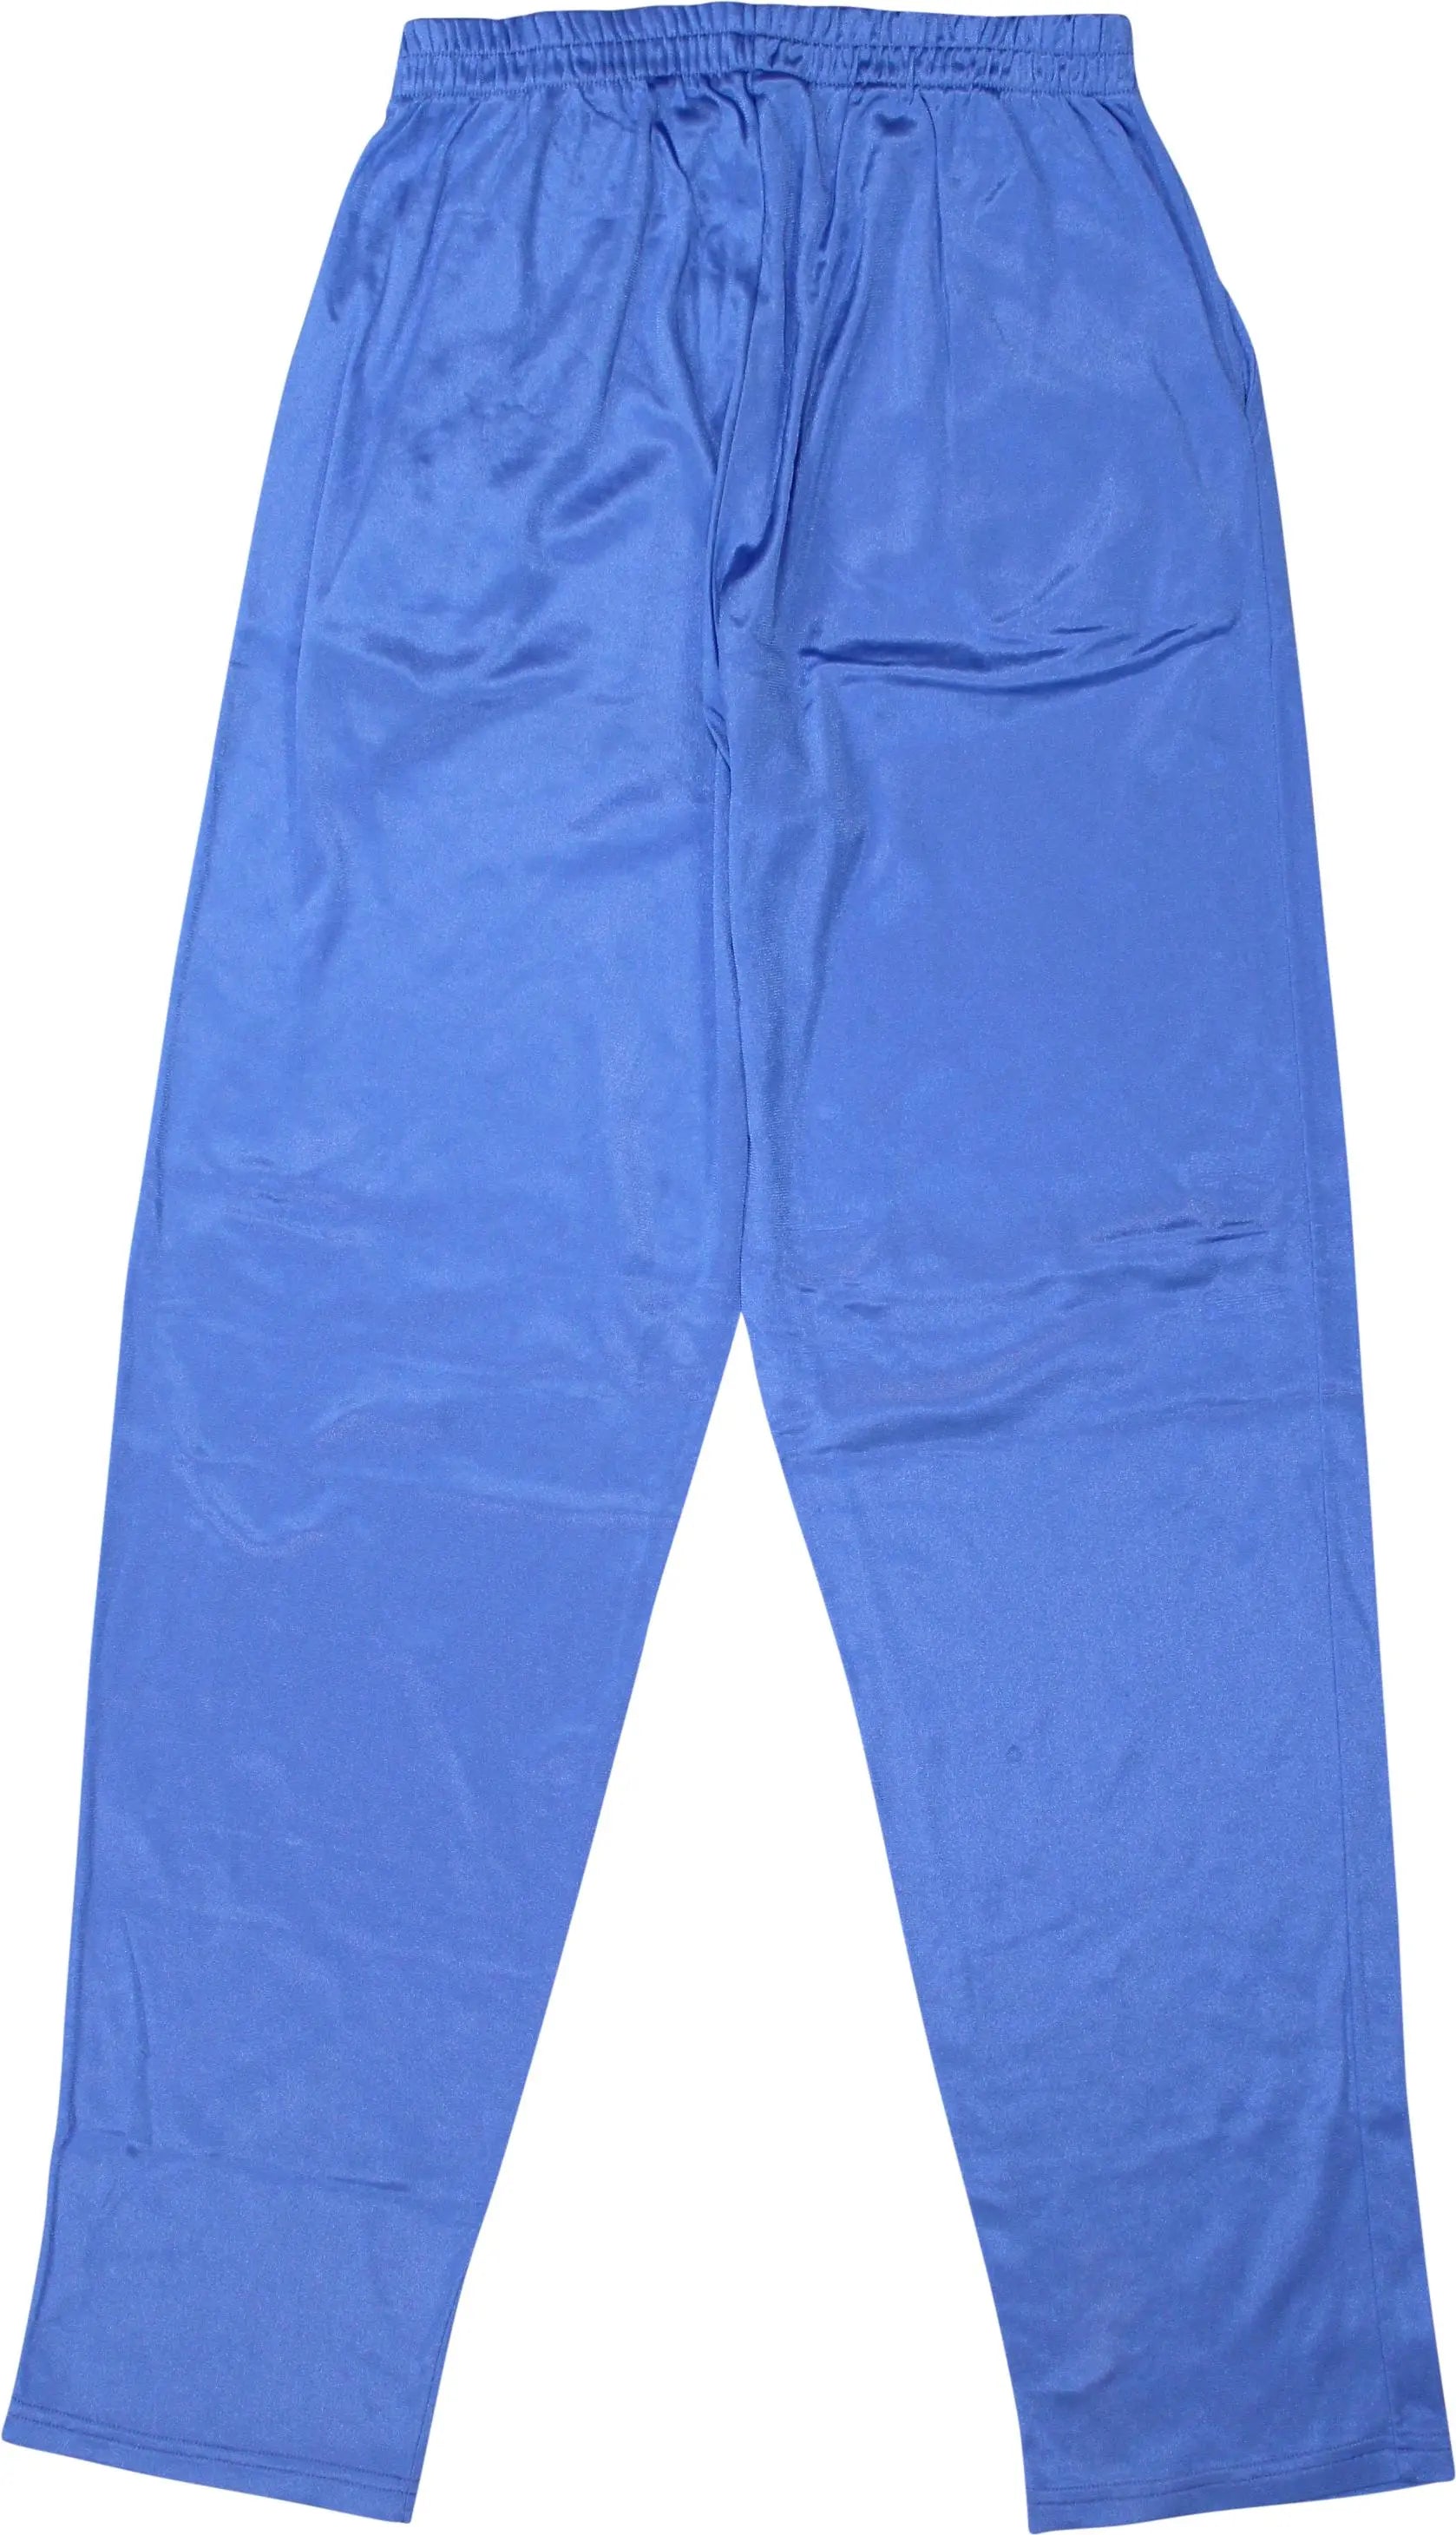 Diadora - Blue Track Pants by Diadora- ThriftTale.com - Vintage and second handclothing